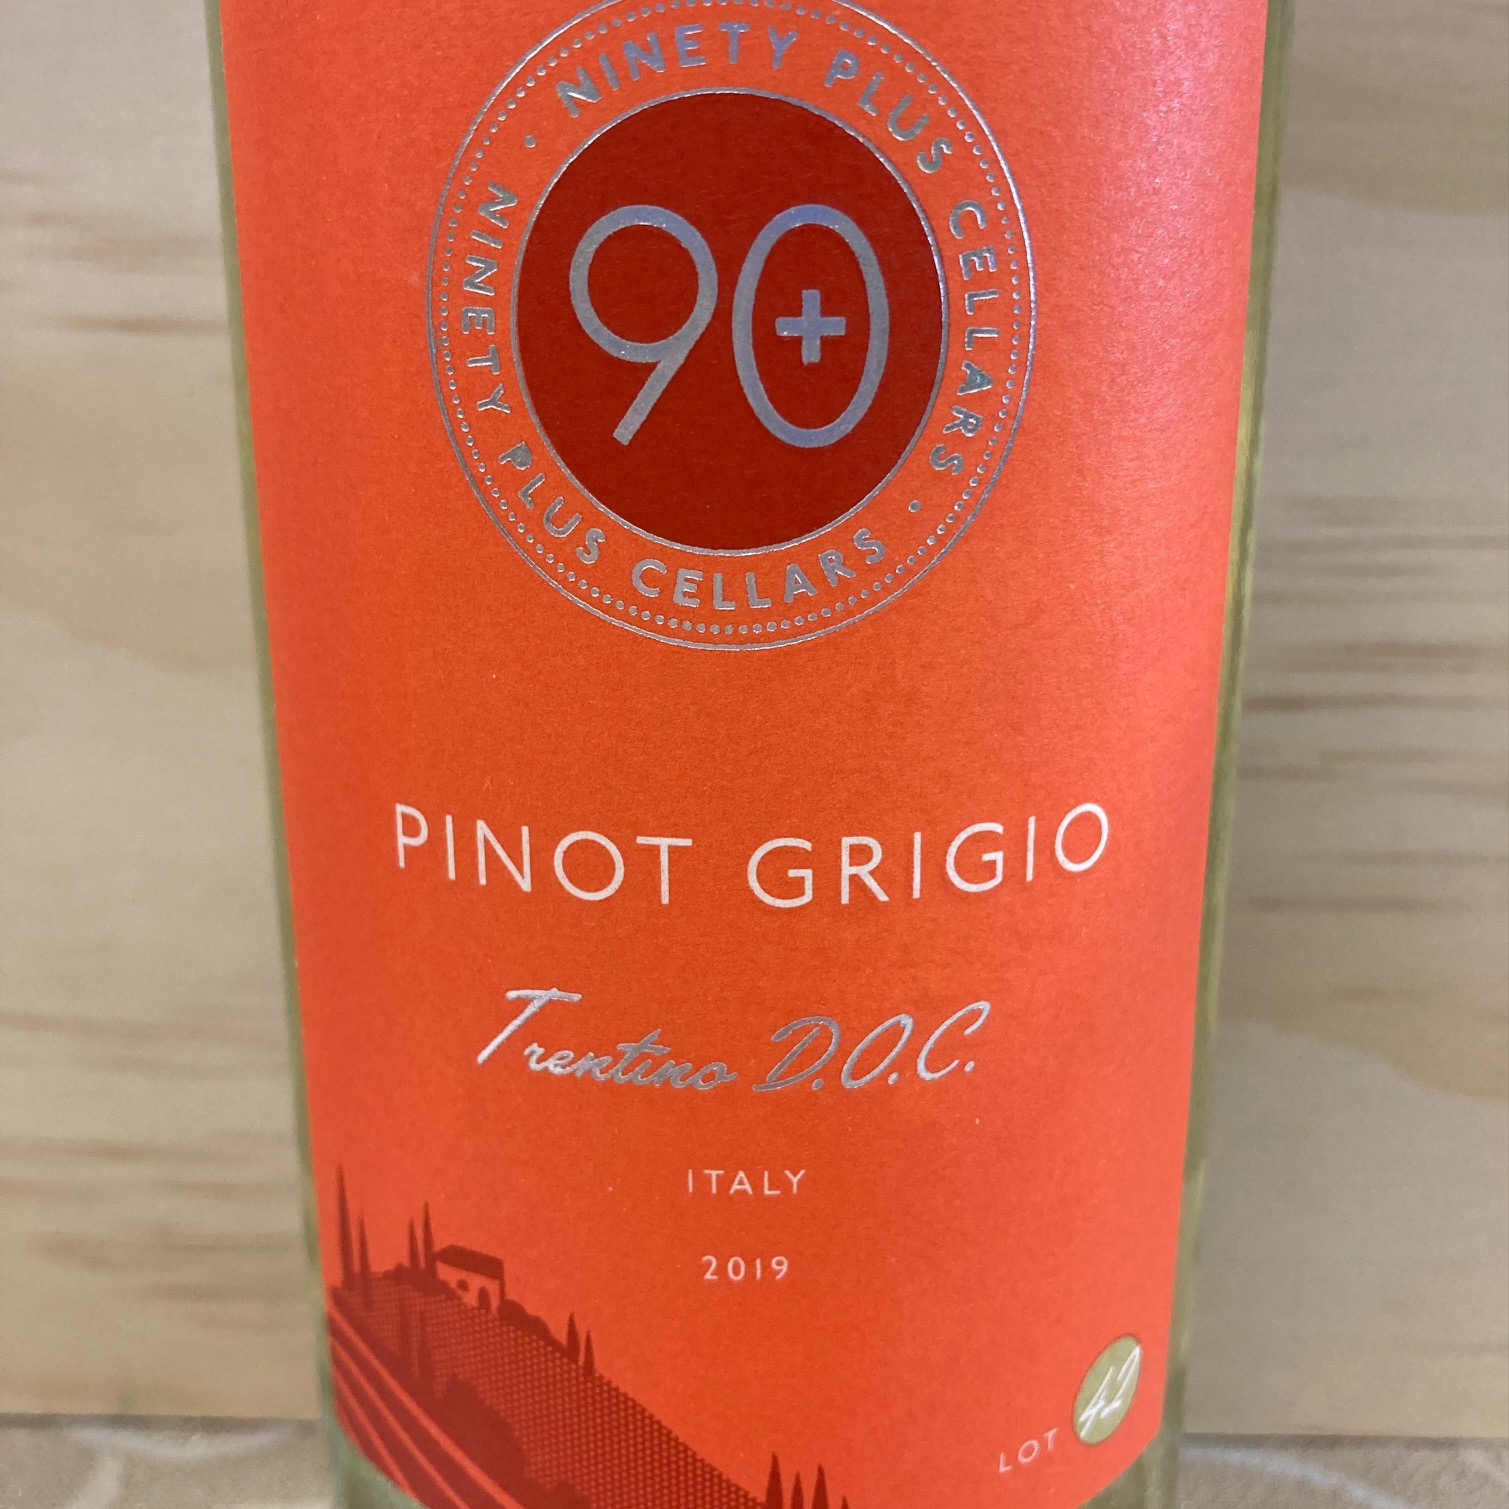 90+ Cellars Pinot Grigio Trentino Lot 42 2020